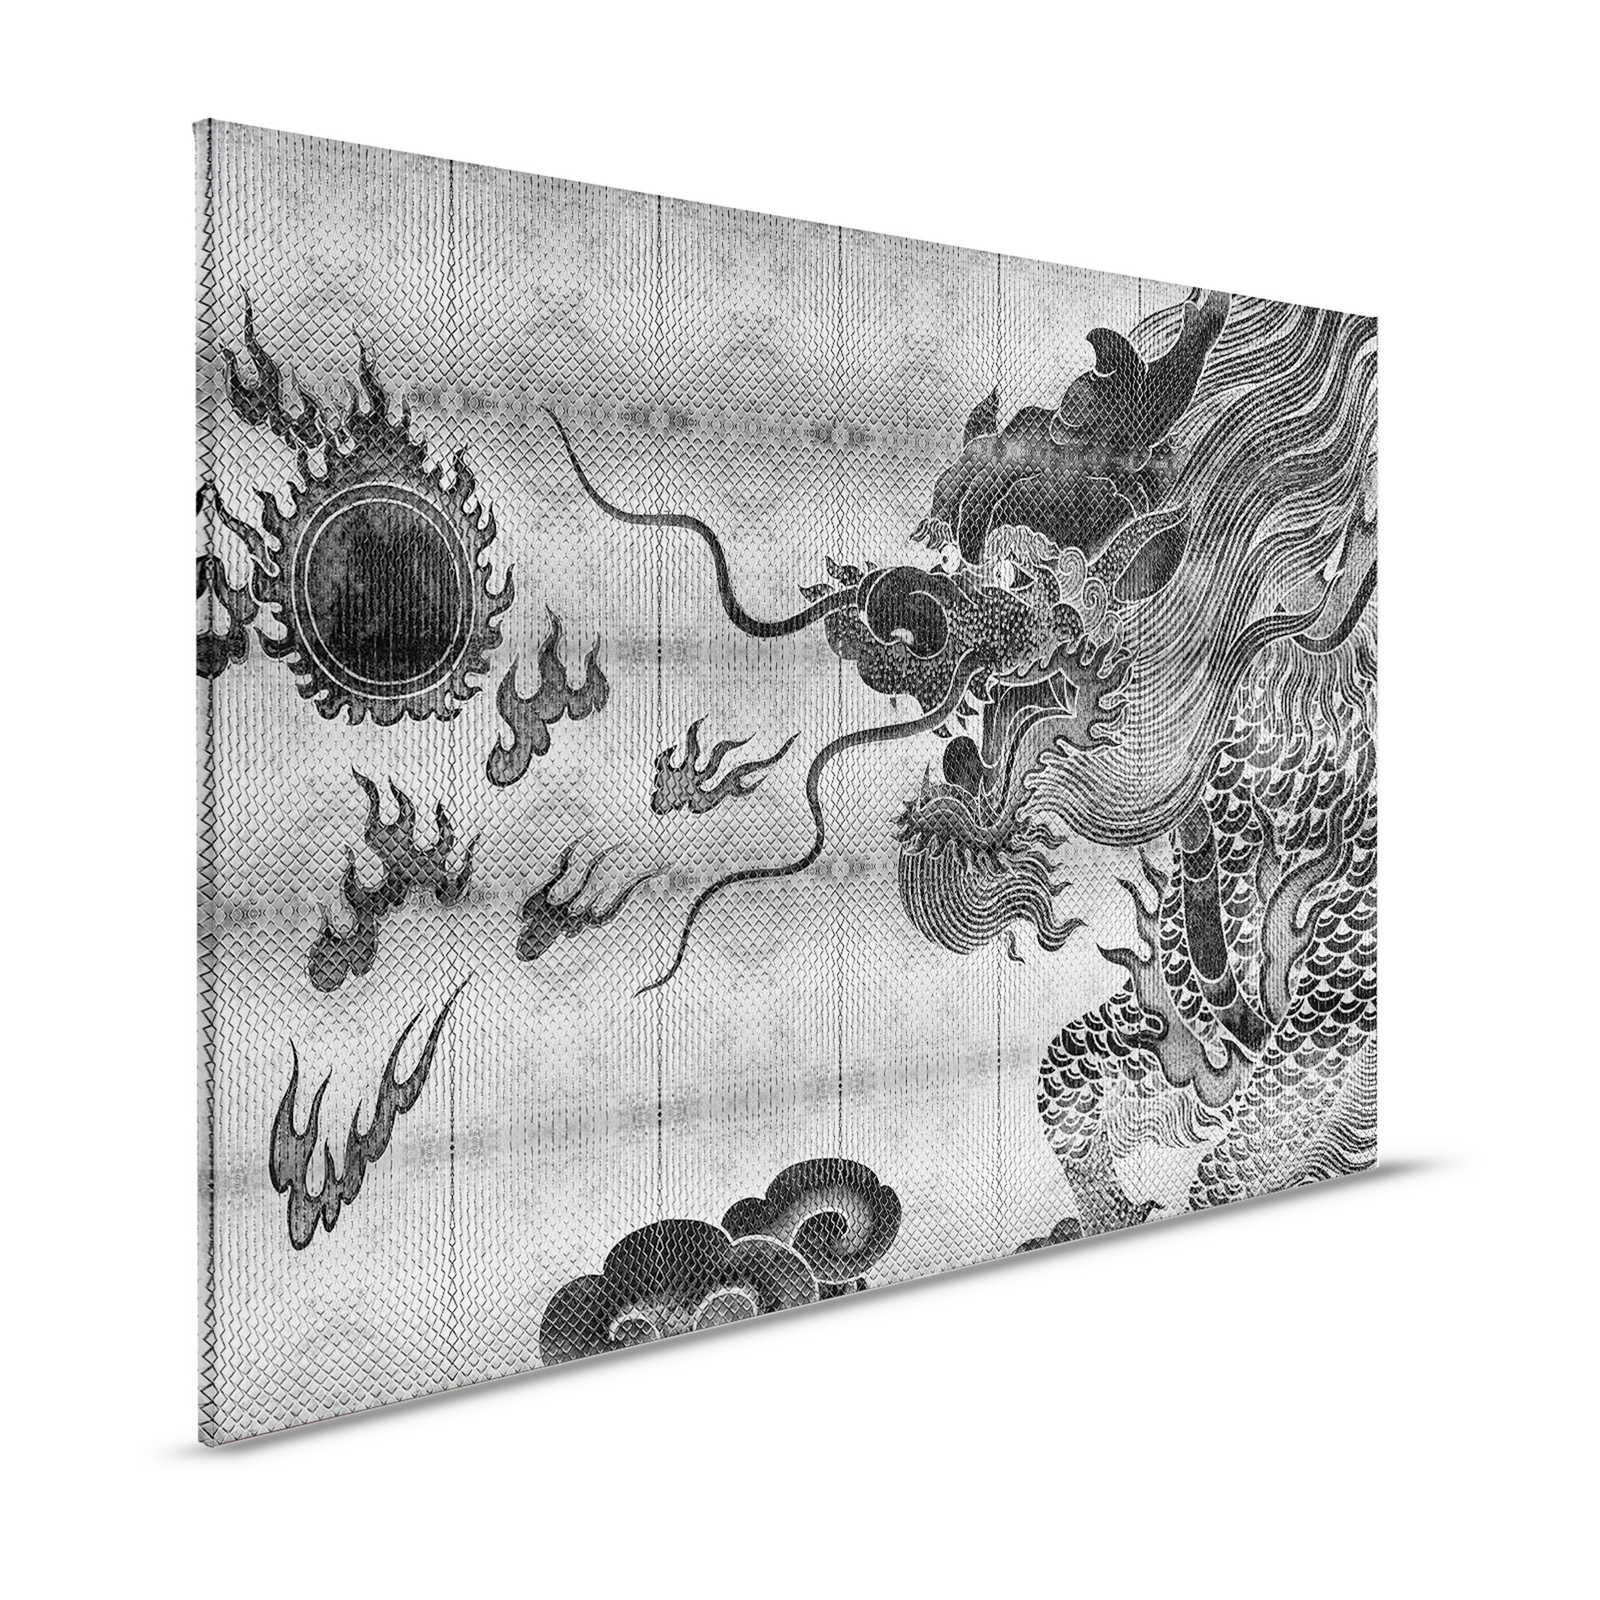 Shenzen 3 - Pintura sobre lienzo Dragón Plateado Metalizado Estilo Asiático - 1.20 m x 0.80 m
